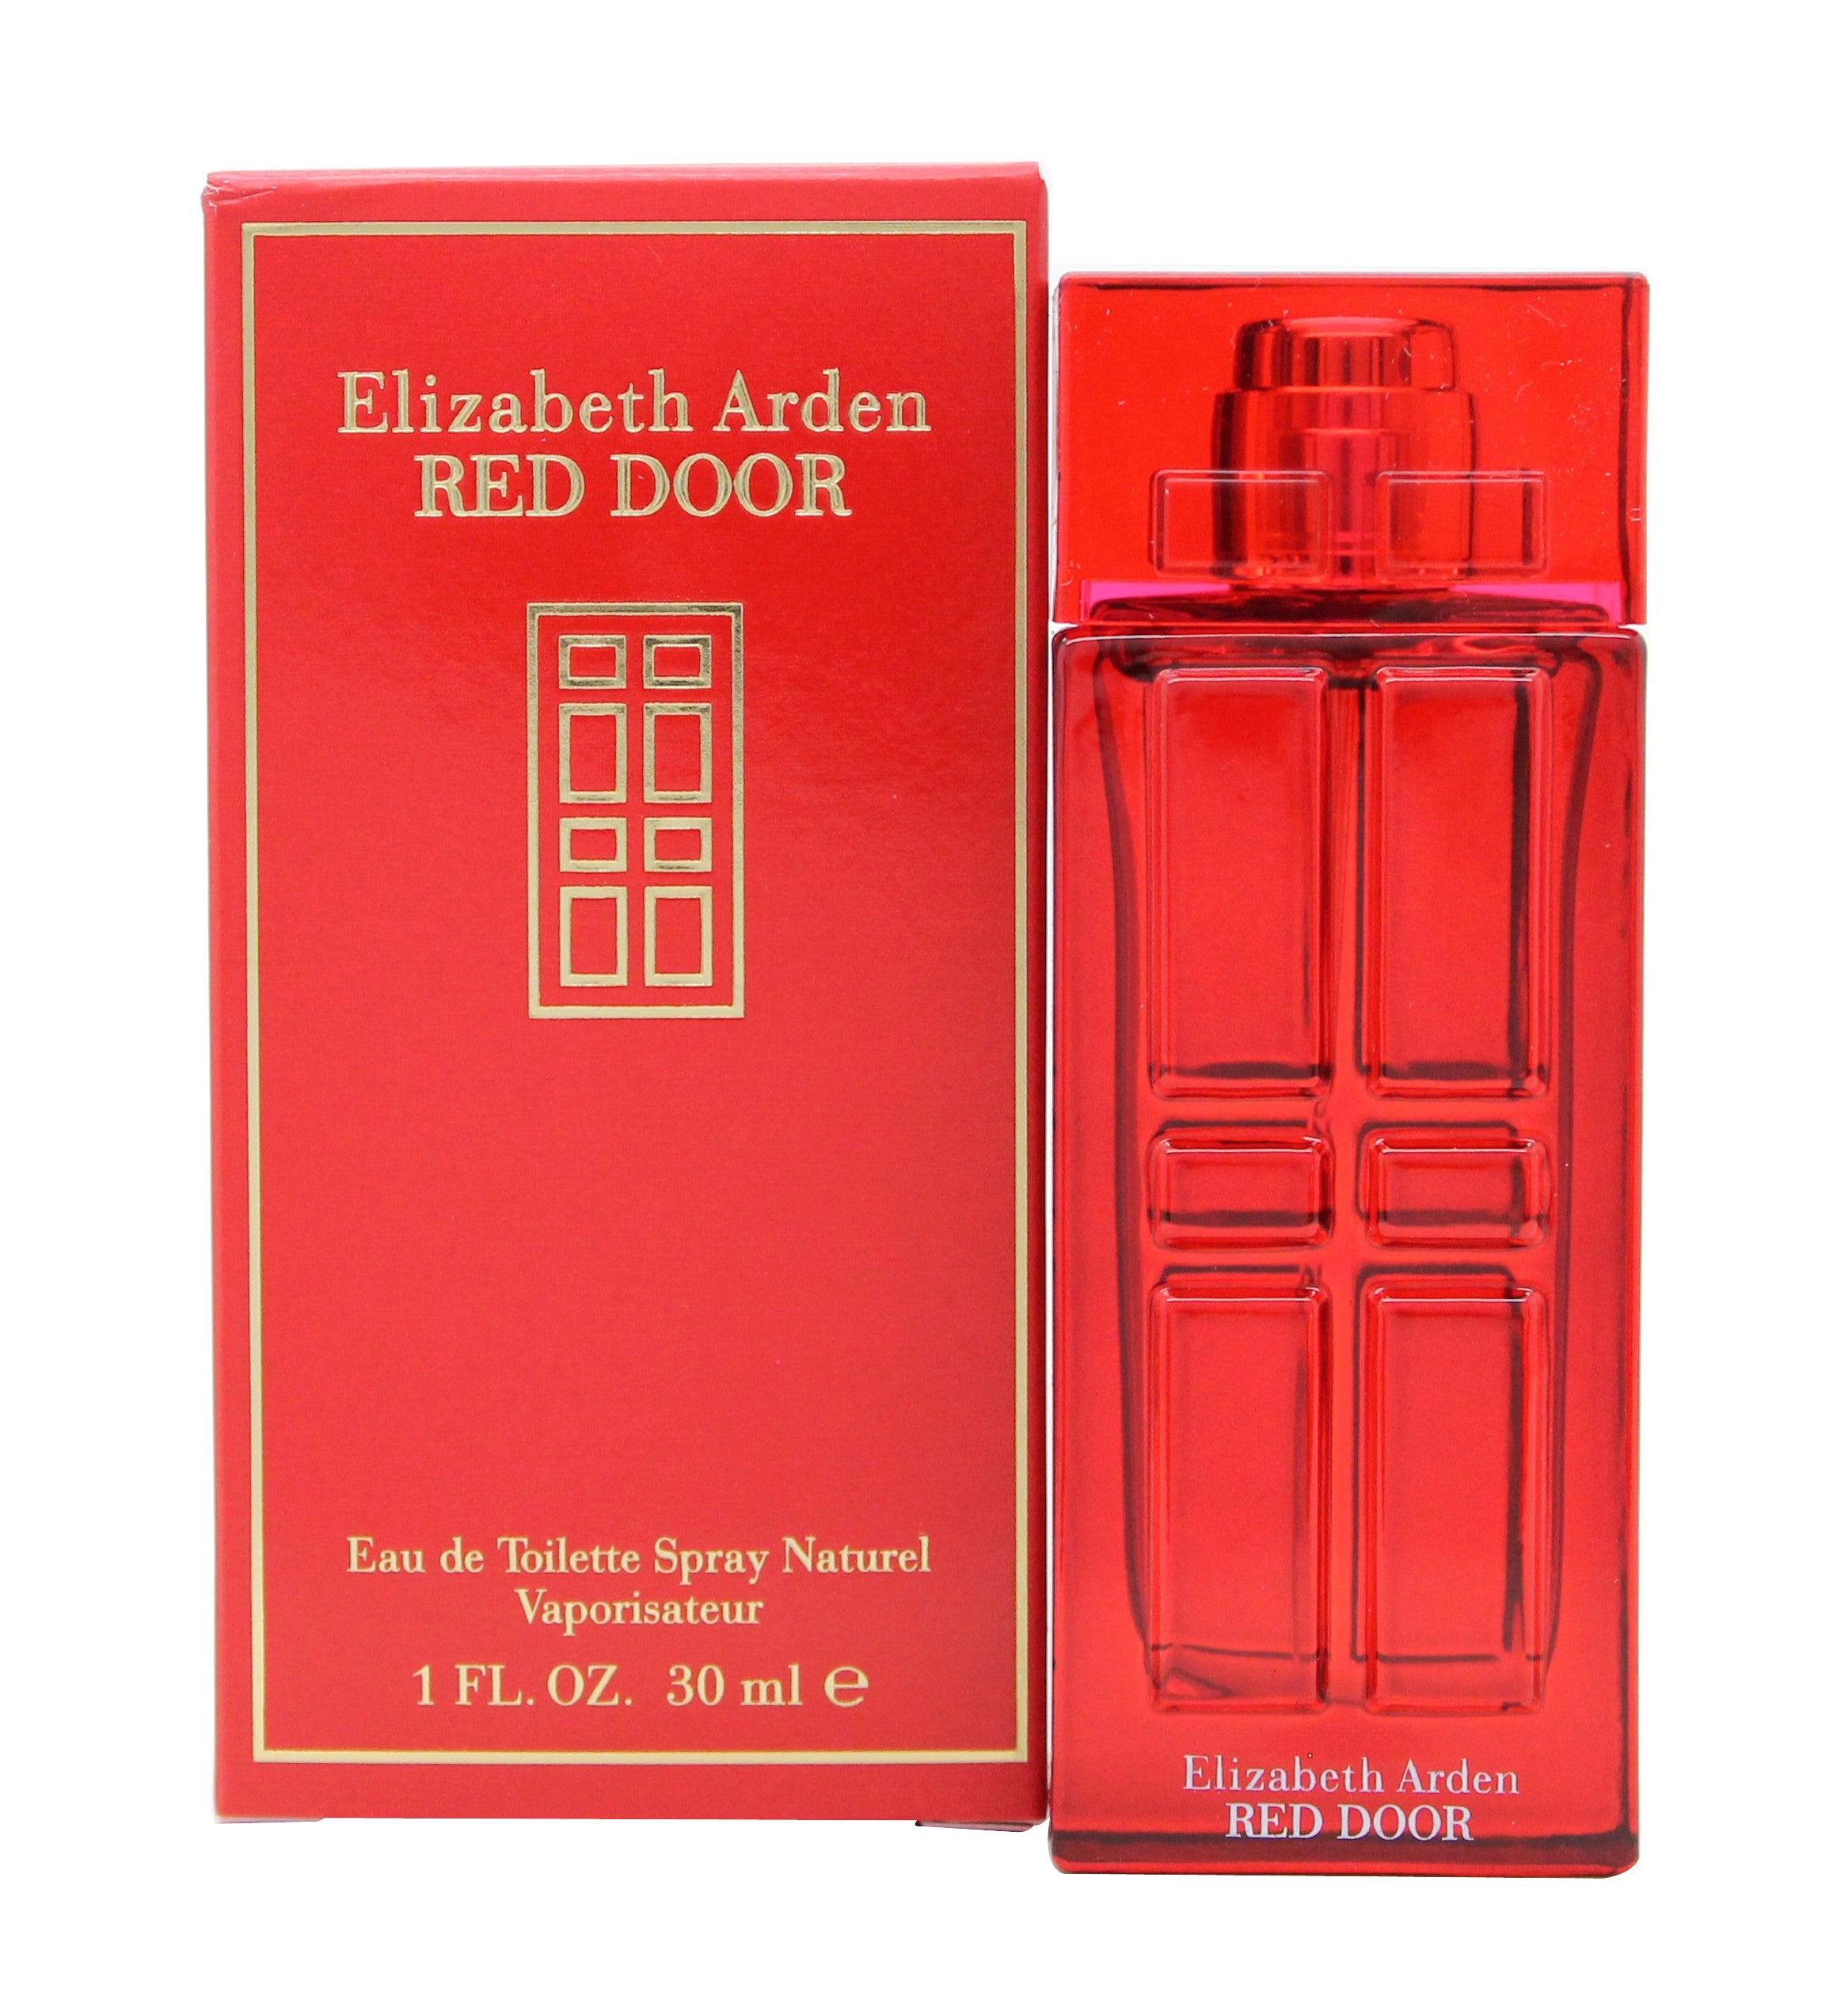 View Elizabeth Arden Red Door Eau de Toilette 30ml Spray New Edition information